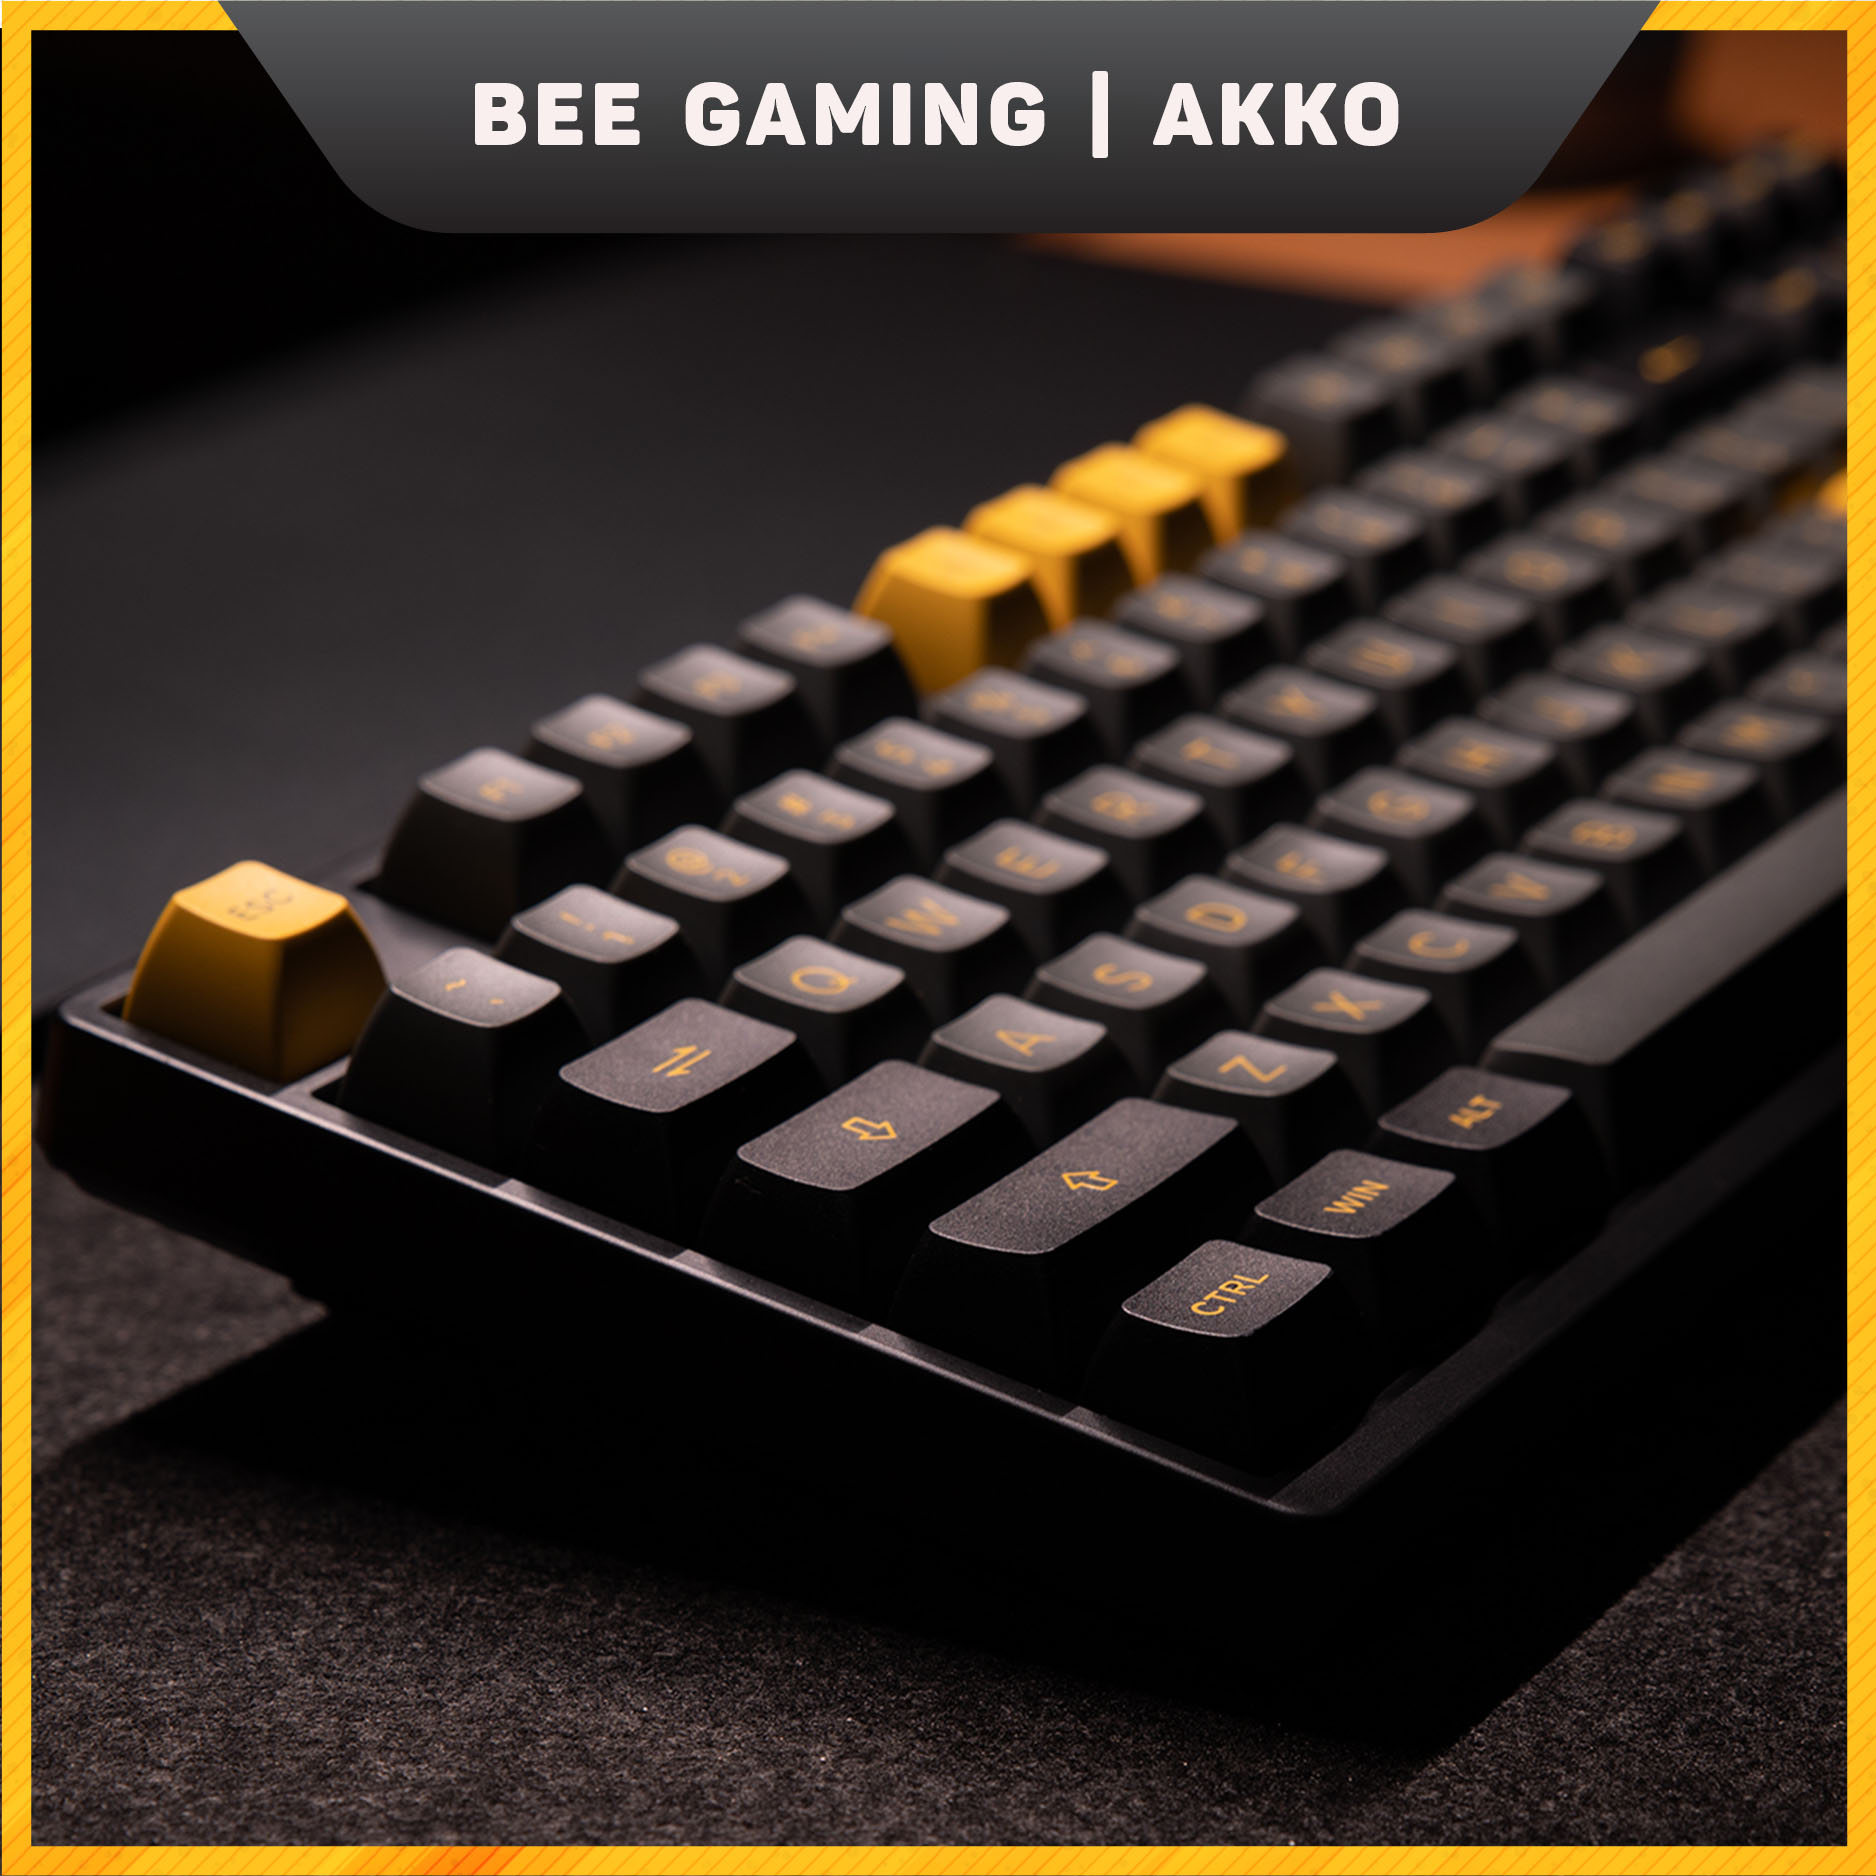 ban-phim-co-akko-3098b-black-gold-beegaming-9